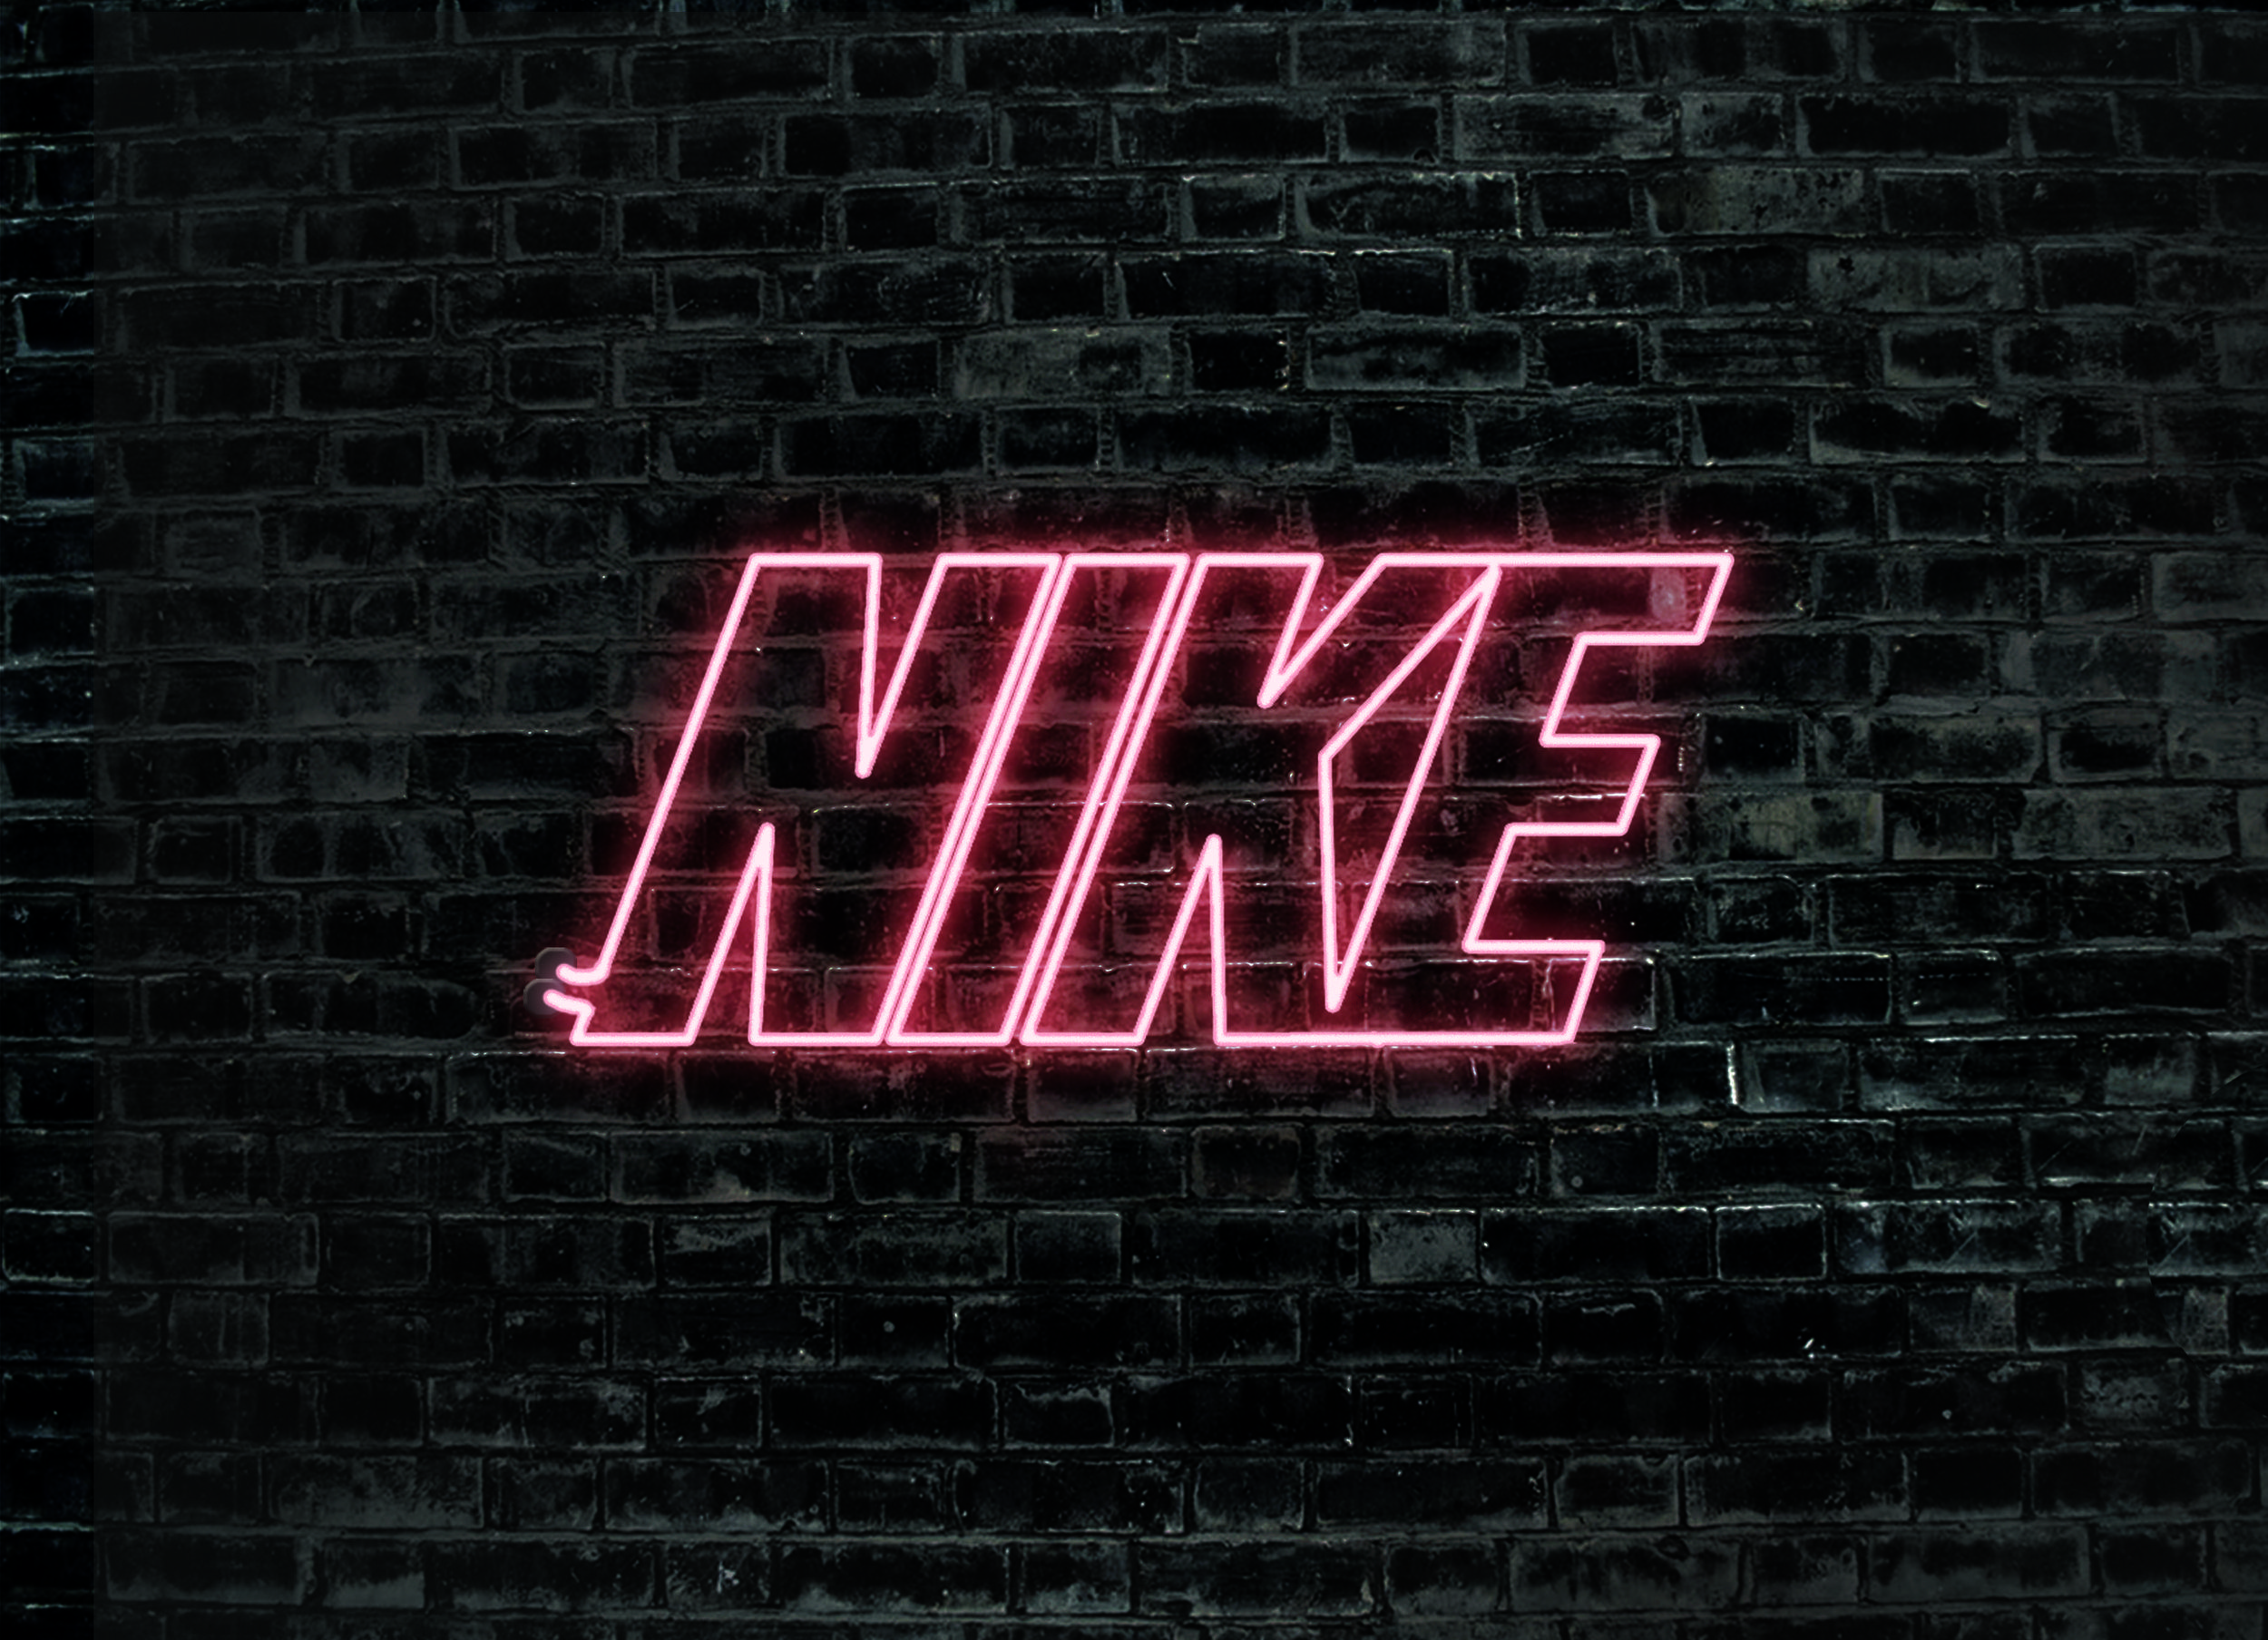 Aesthetic Nike Wallpapers - Top Free